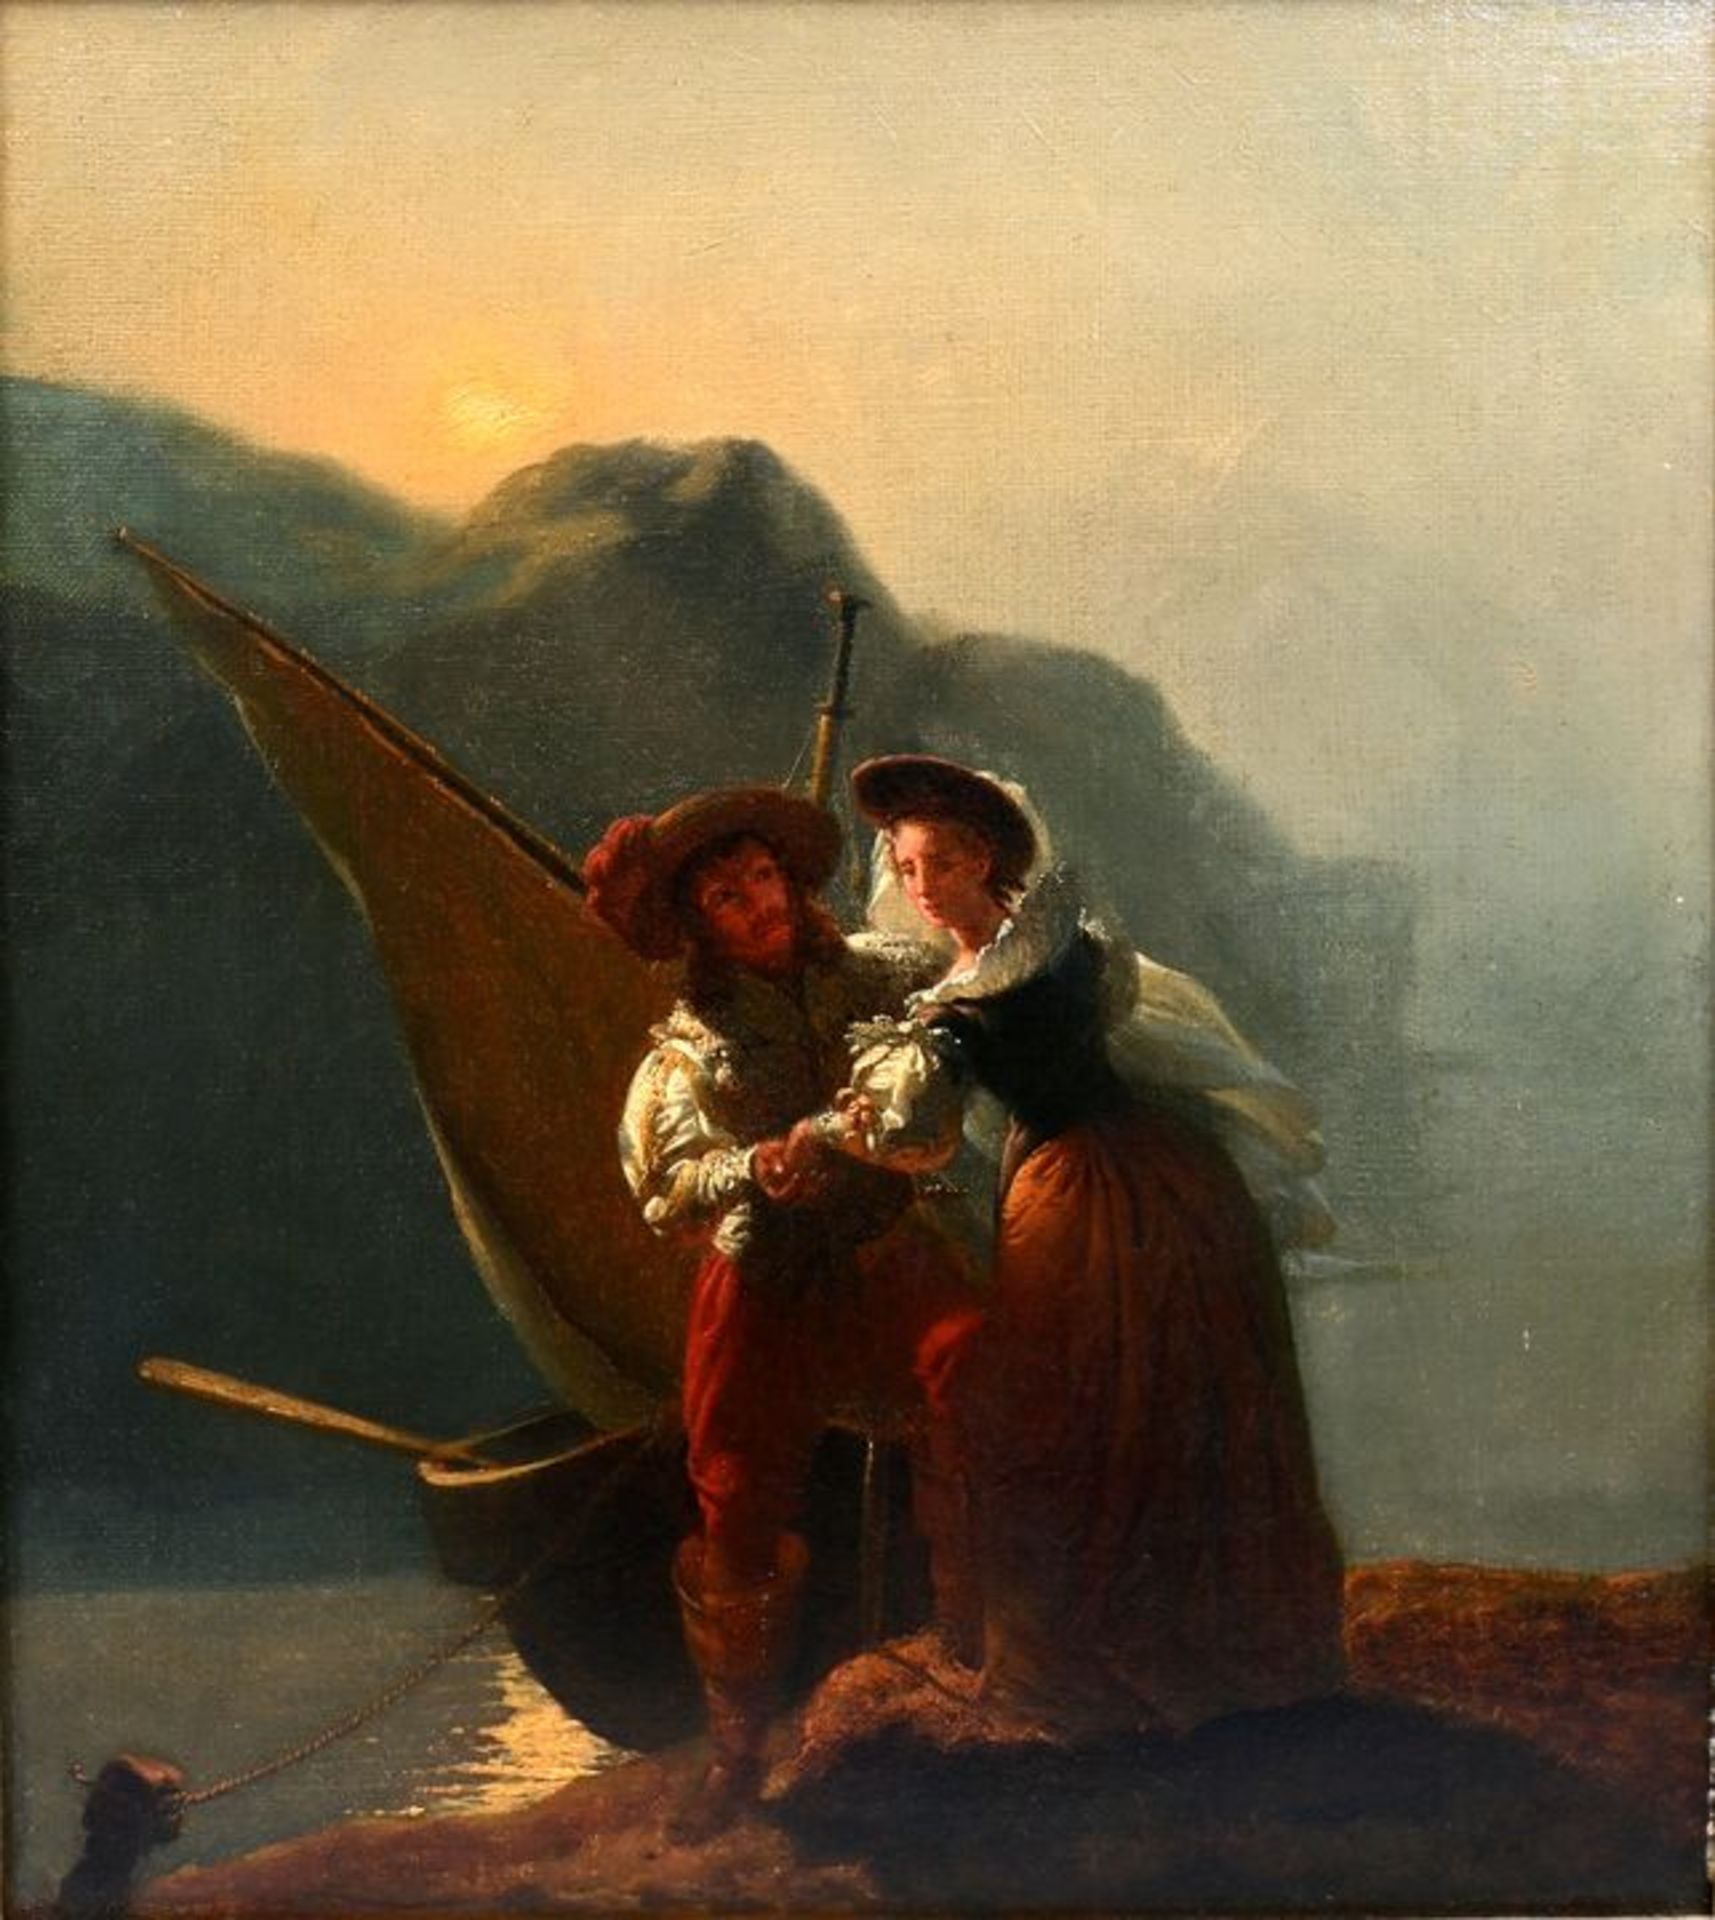 undeutl. sign, Gemälde ''Paar am Kahn'' / unknown, romantic scene, painting